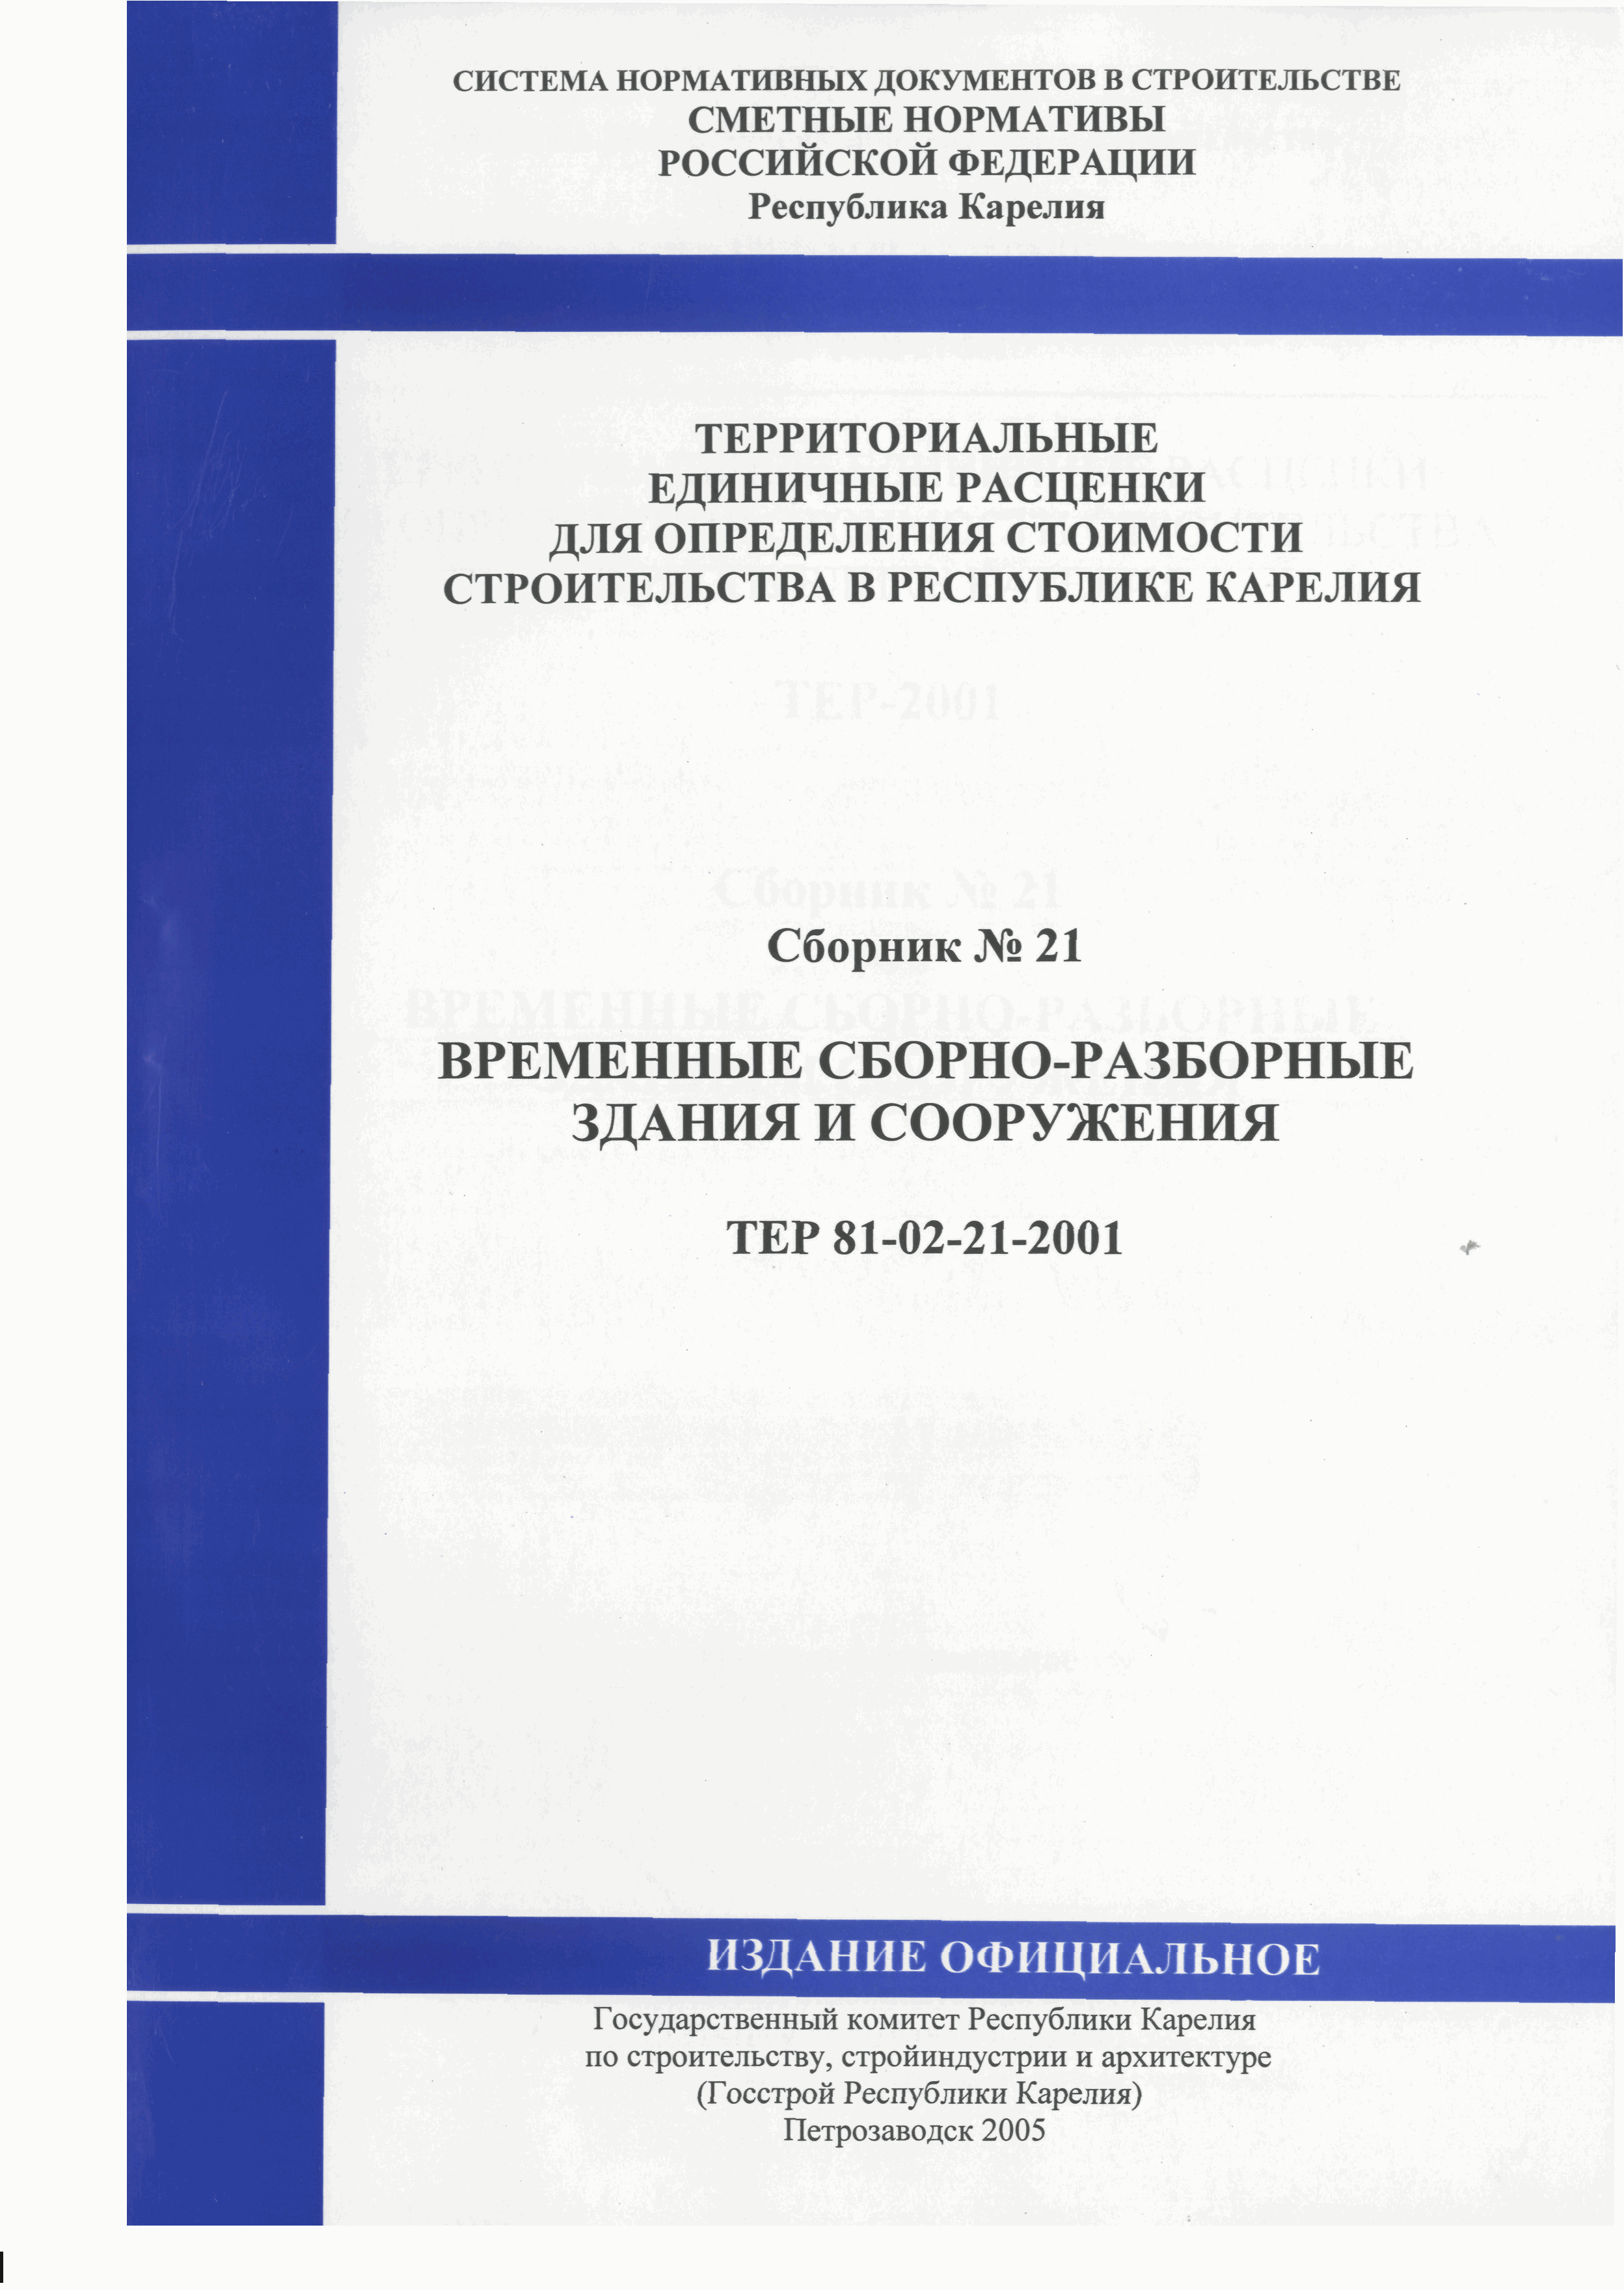 ТЕР Республика Карелия 2001-21